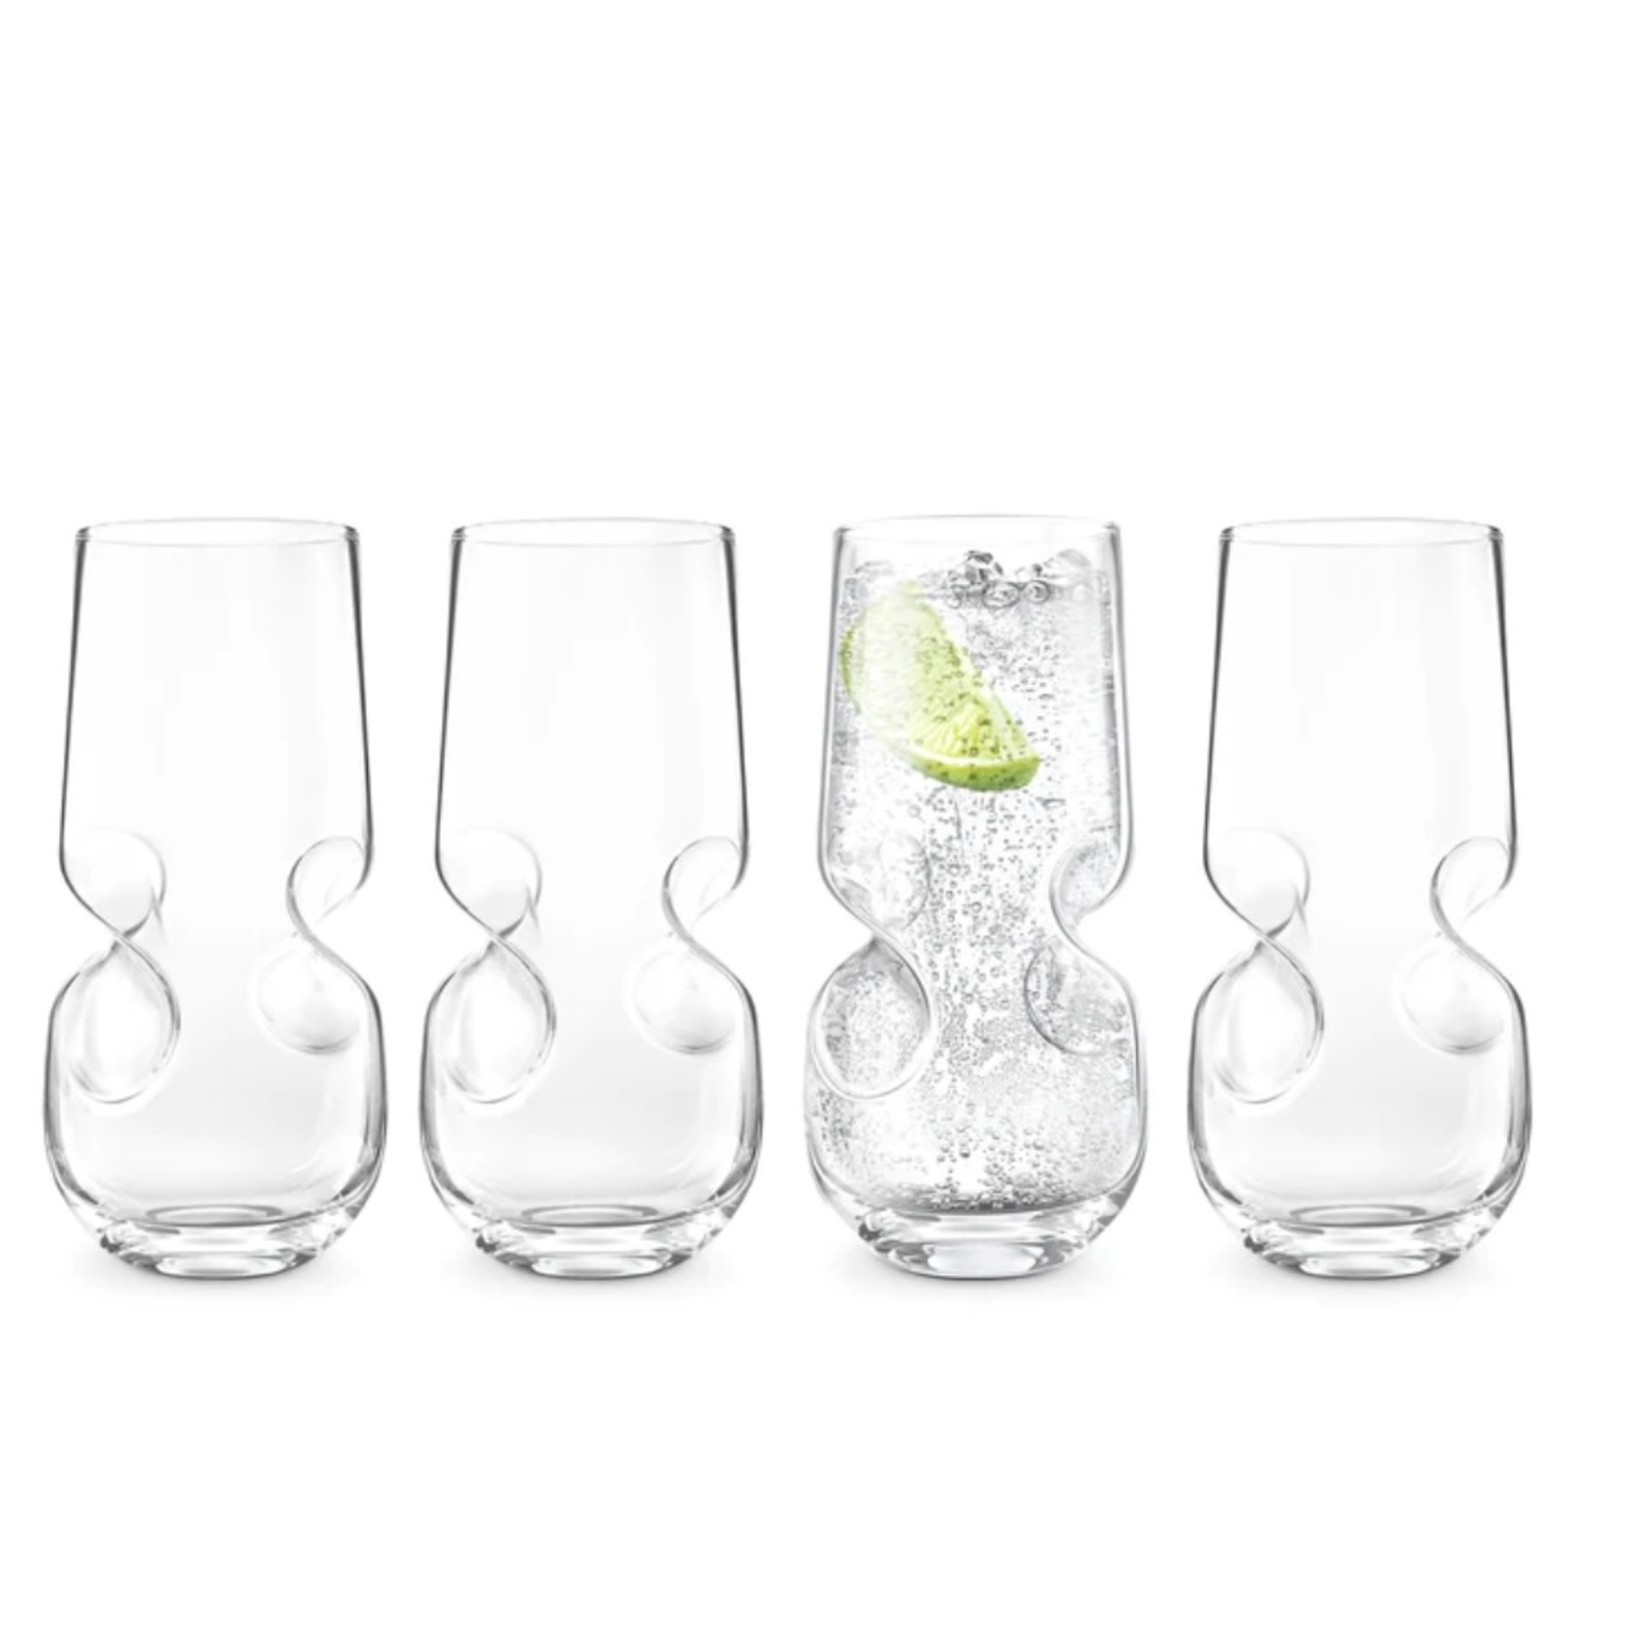 FINAL TOUCH FINAL TOUCH Bubbles/Seltzer Bubbly Beverage Glasses S/4- 17oz